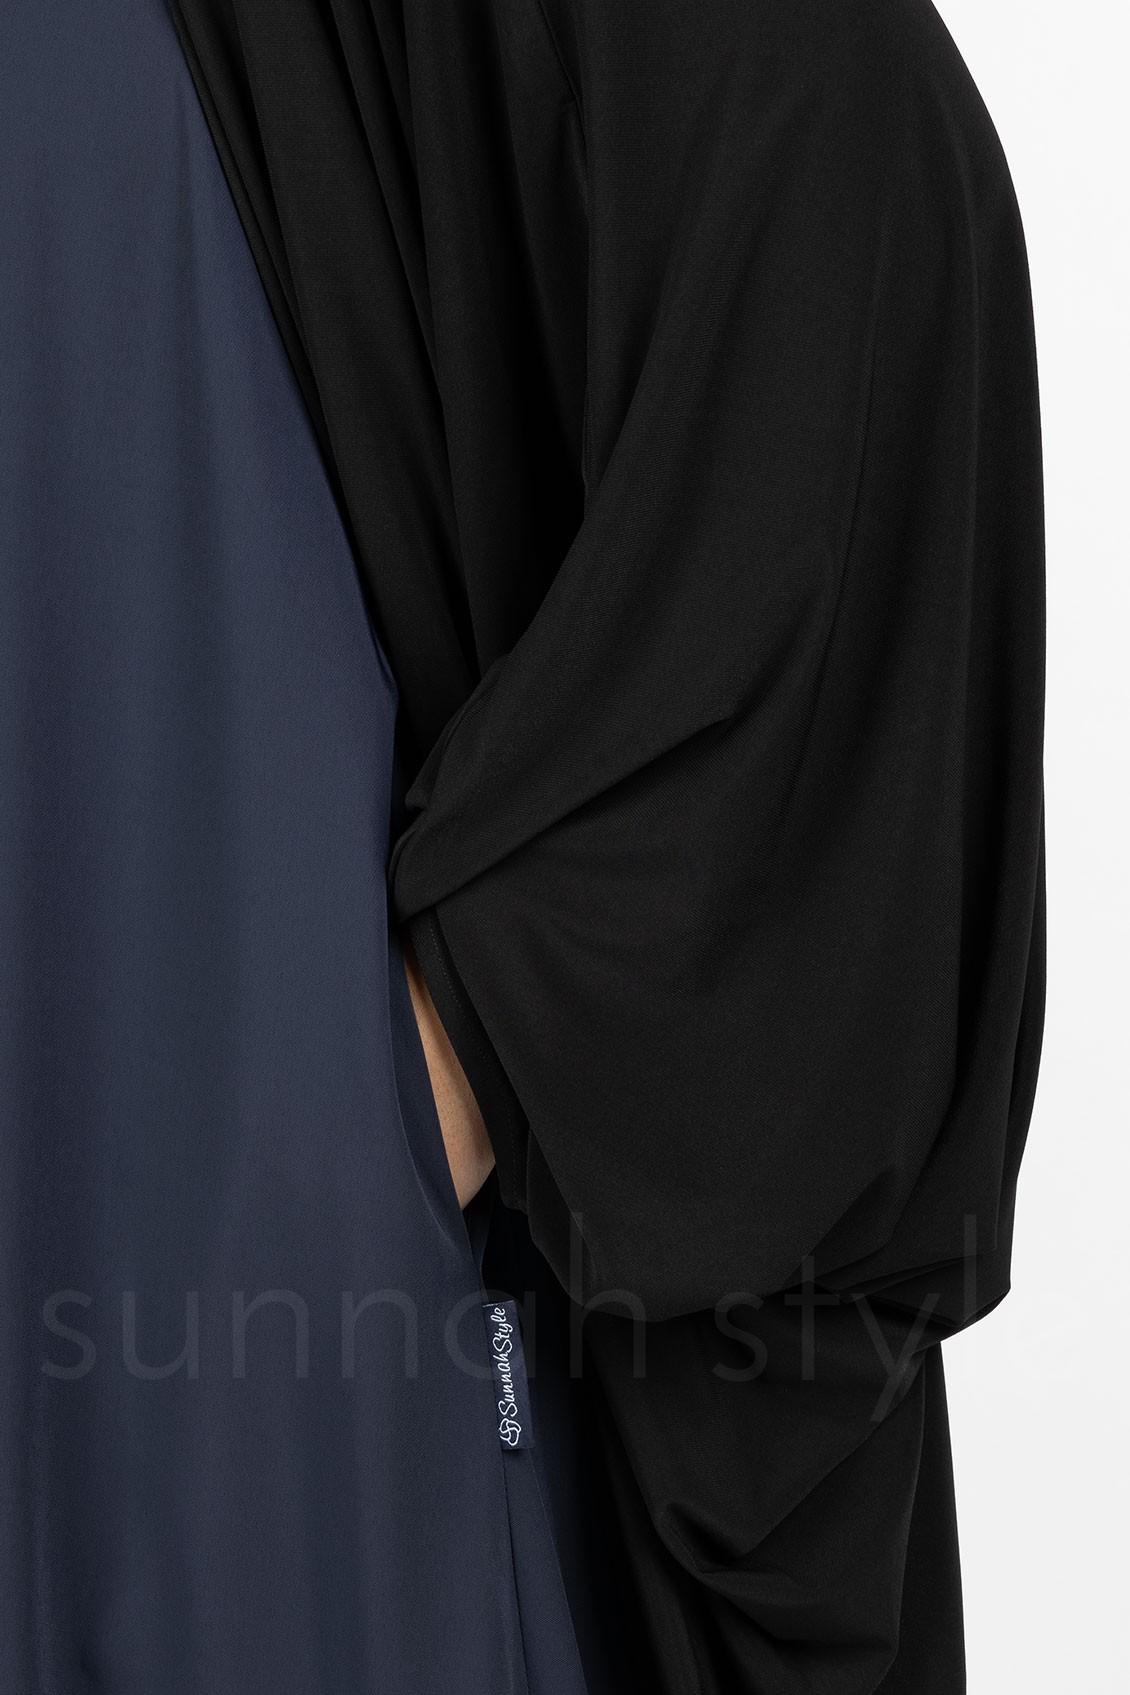 Sunnah Style Essentials Sleeveless Abaya Navy Blue